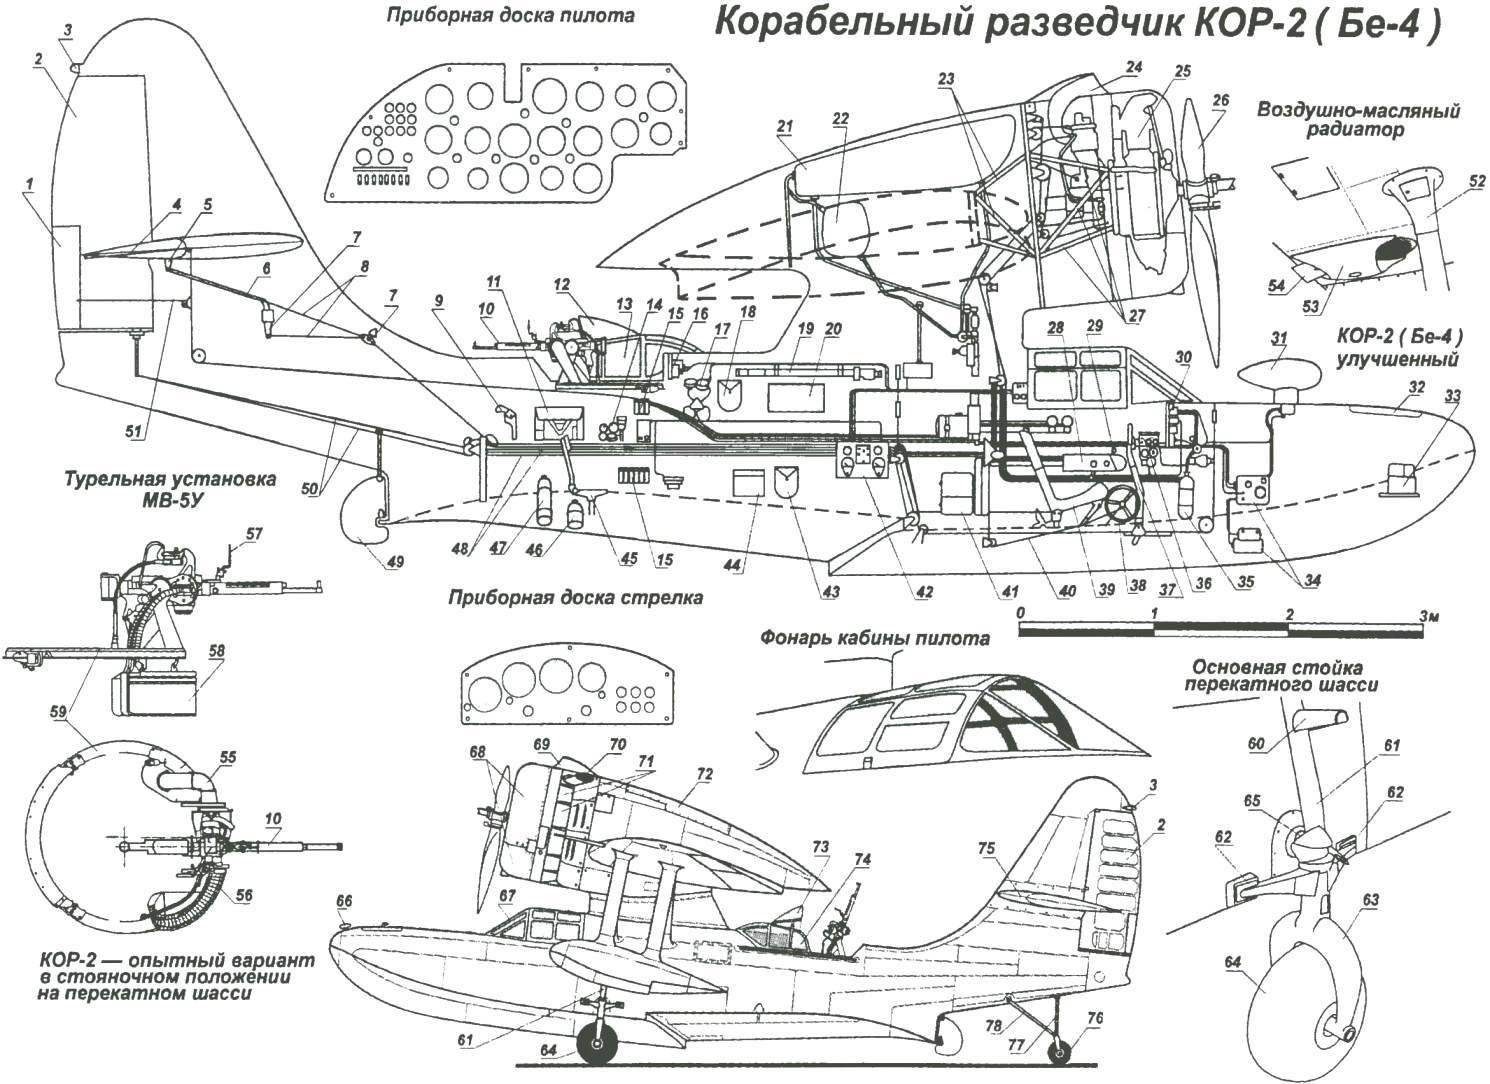 Ejection naval seaplane reconnaissance KOR-2 (be-4)